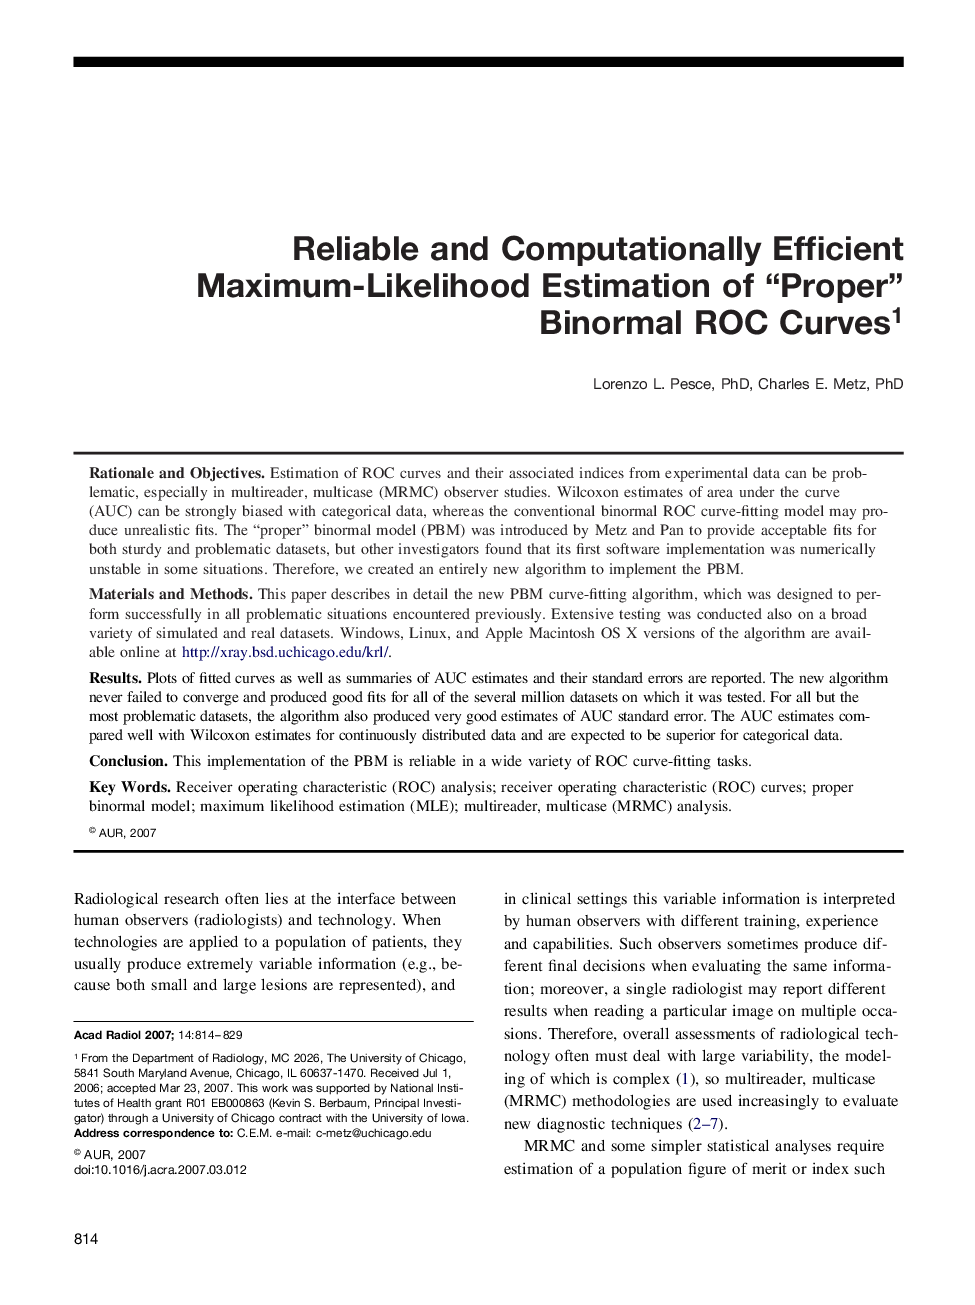 Reliable and Computationally Efficient Maximum-Likelihood Estimation of “Proper” Binormal ROC Curves